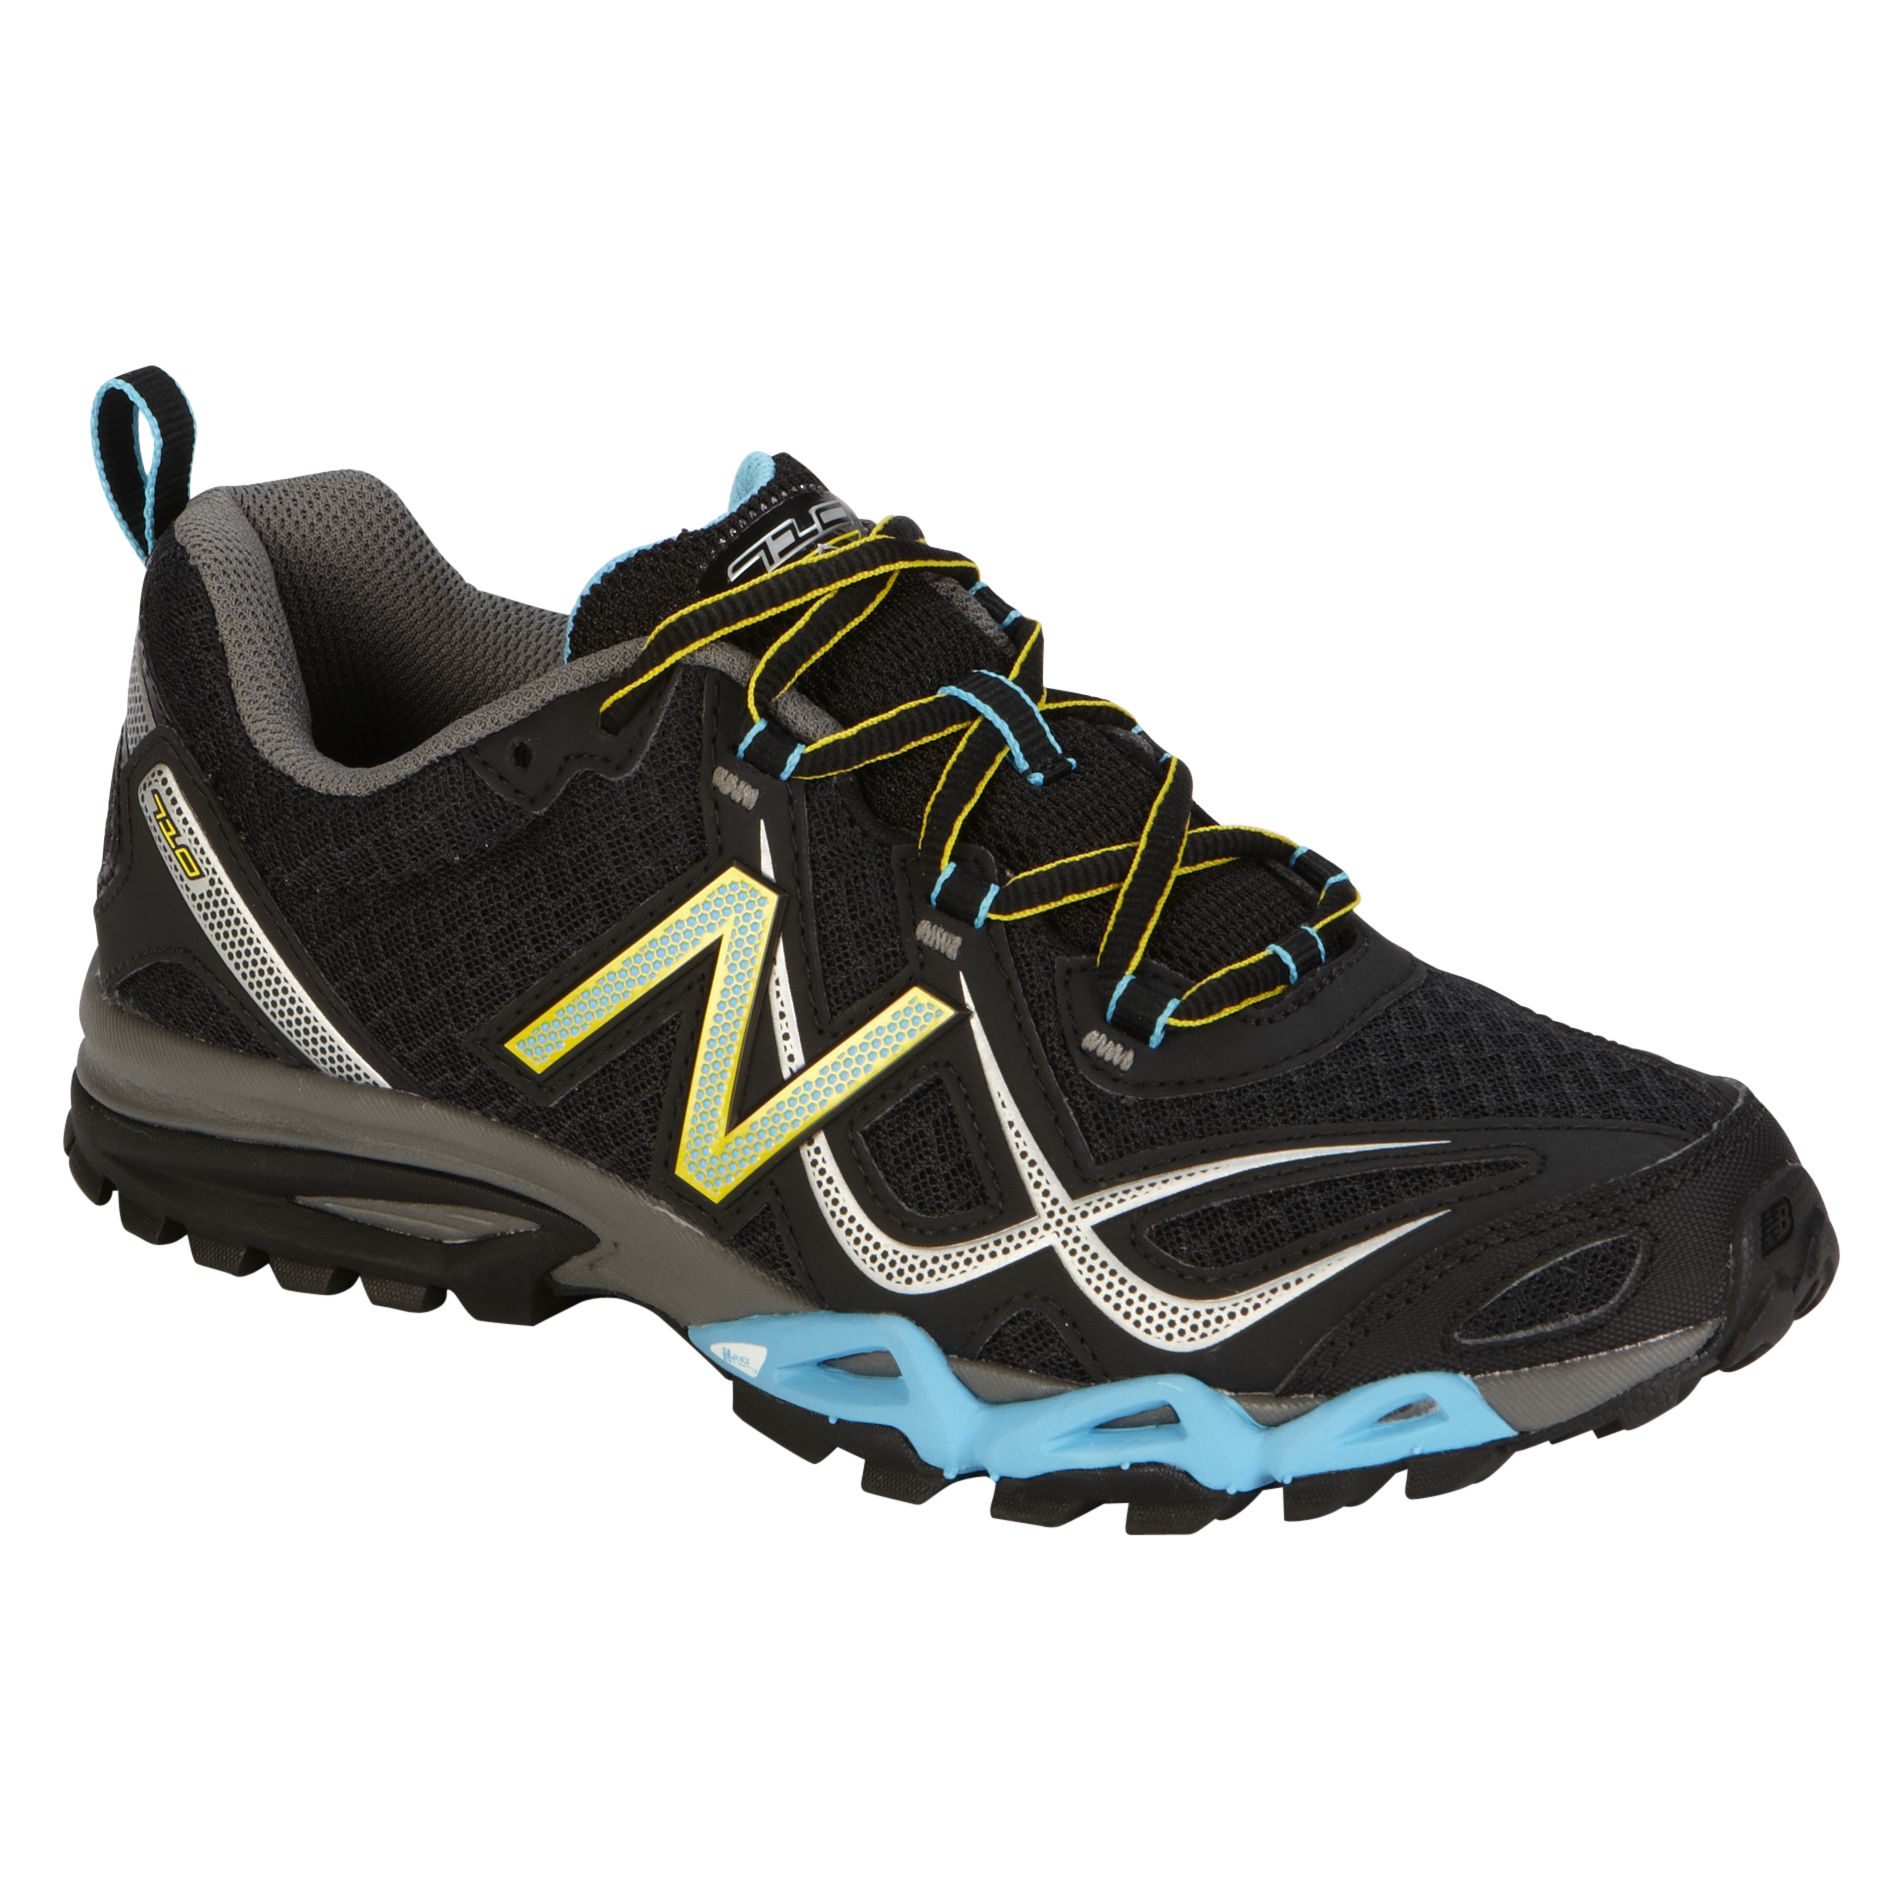 New Balance Women's 710 Trail Running Athletic Shoe - Black/Blue